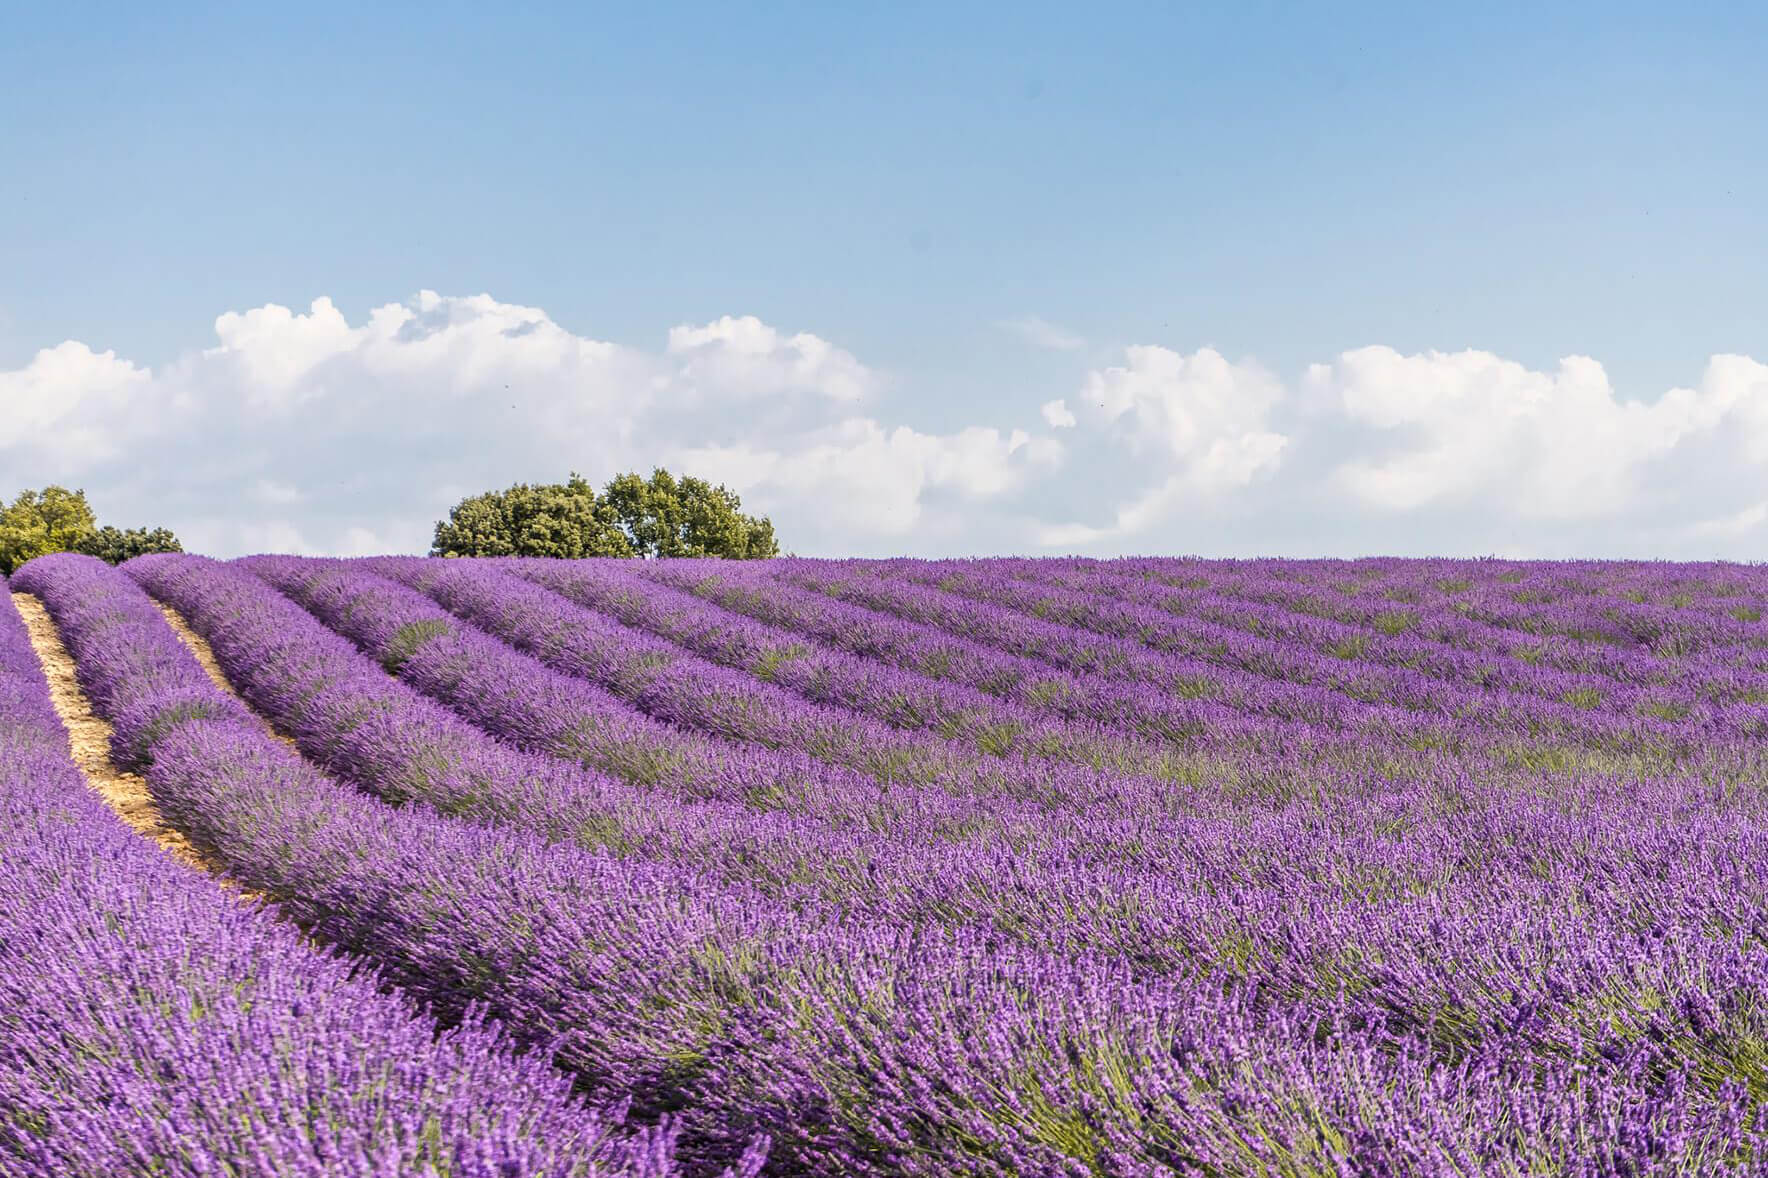 Gorgeous lavender fields